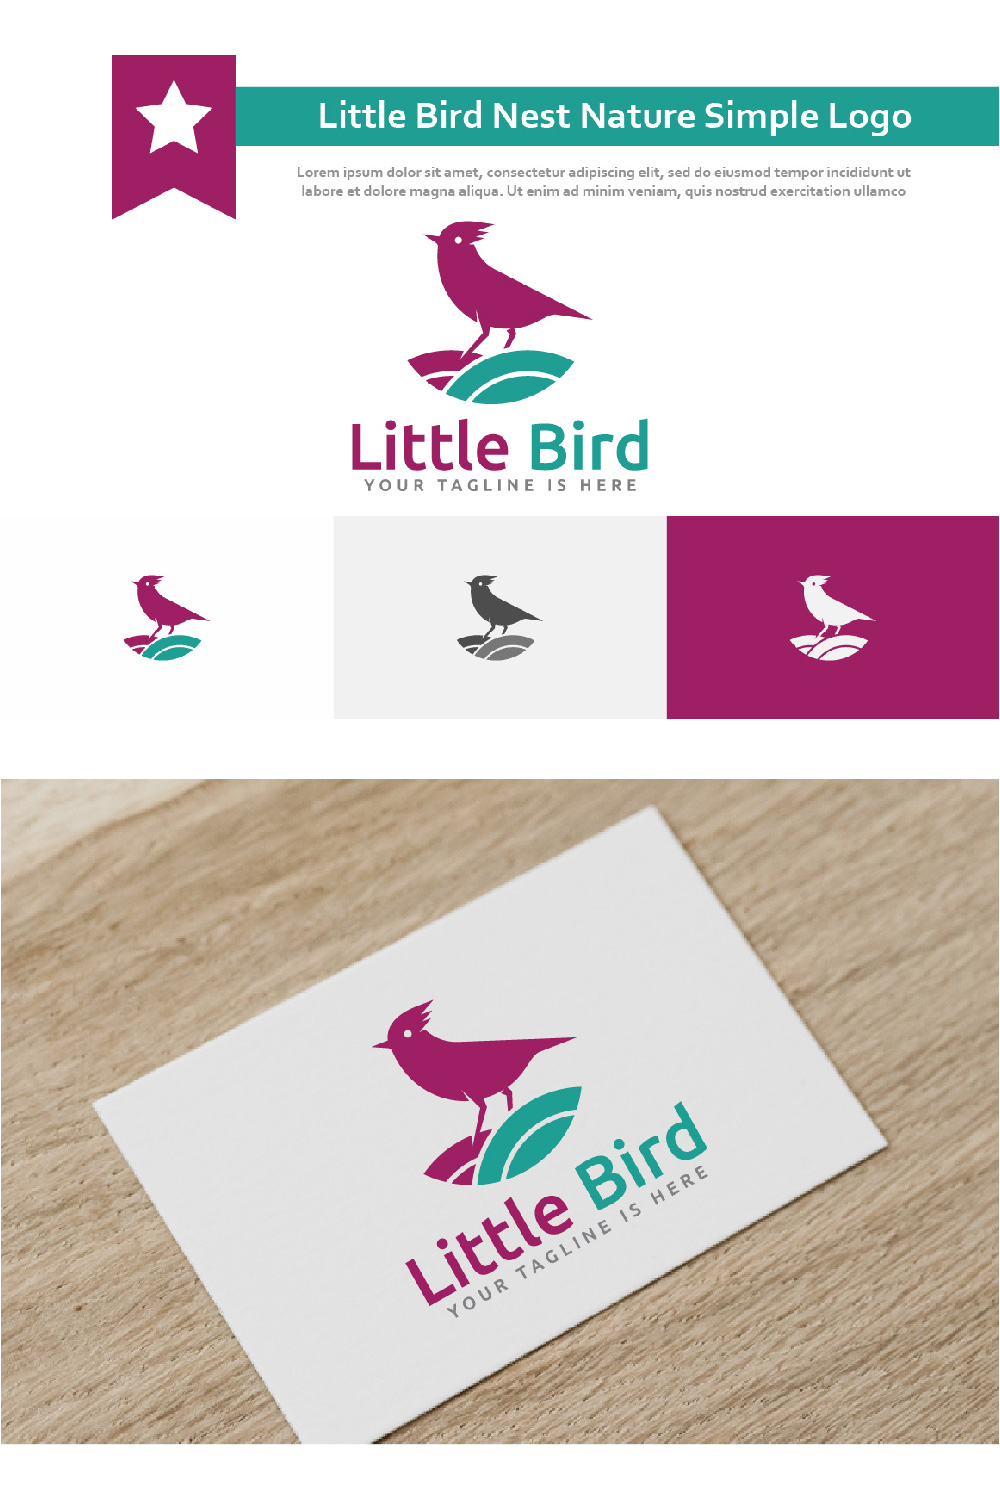 Nice bird for your logo.